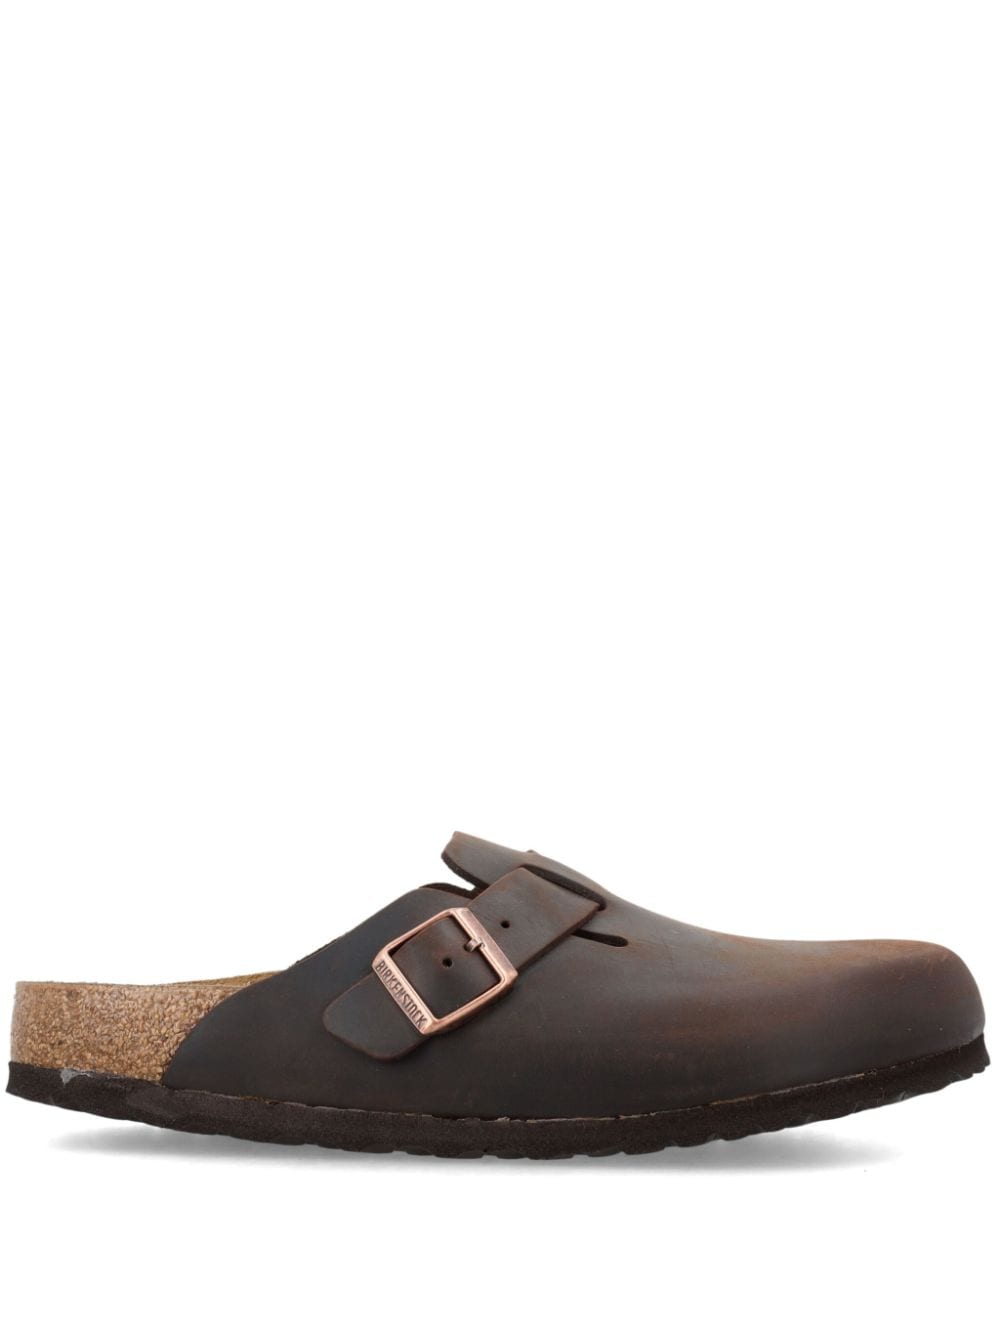 Image 1 of Birkenstock Boston leather sandals